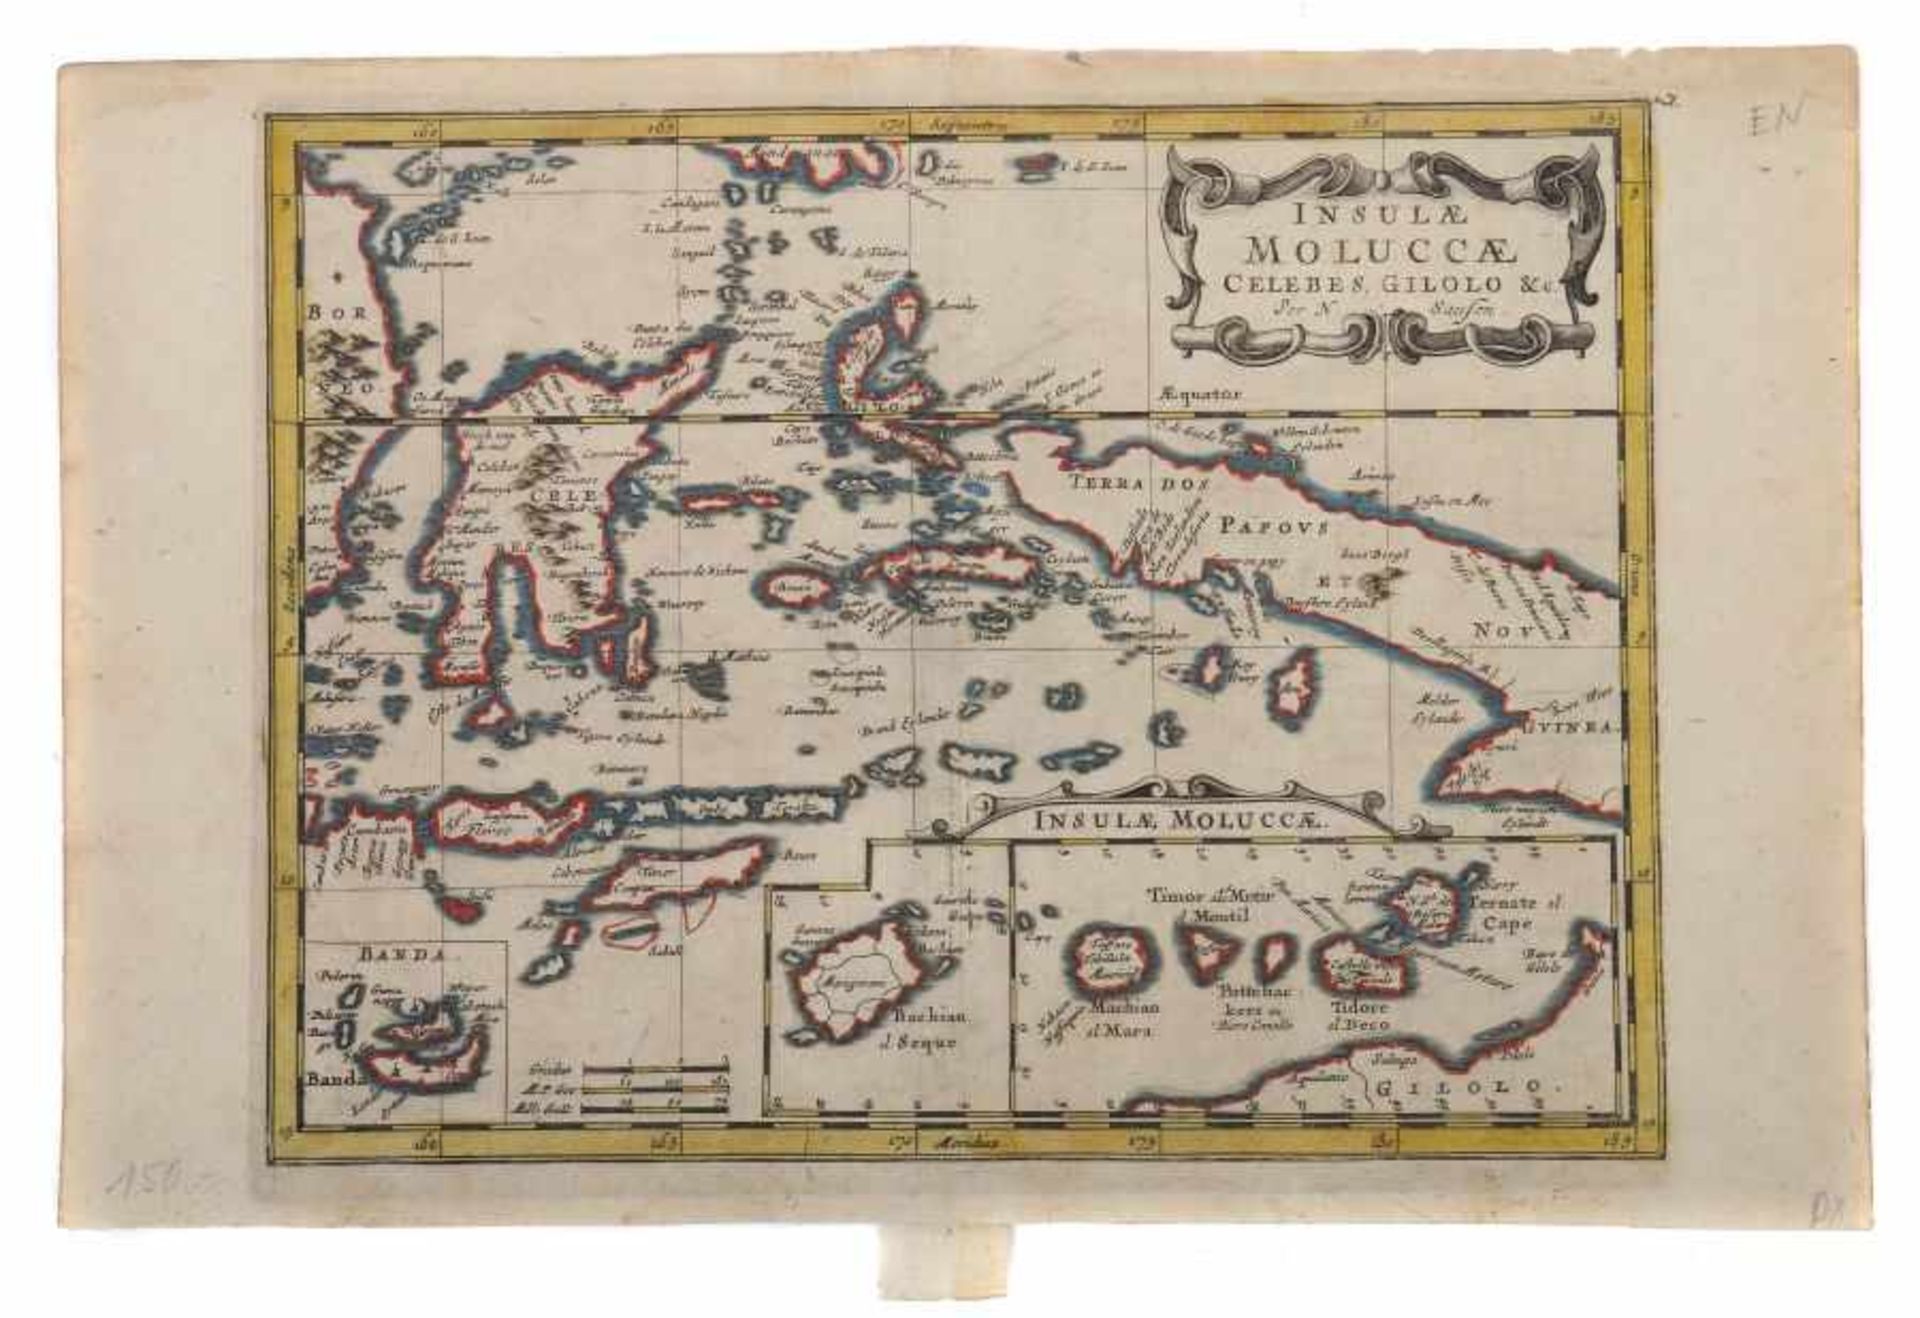 Sanson d'Abbeville, Nicolas 1600 - 1667. "Insulae Moluccae, Celebes Gilolo & C.", die Molukken - Image 2 of 2